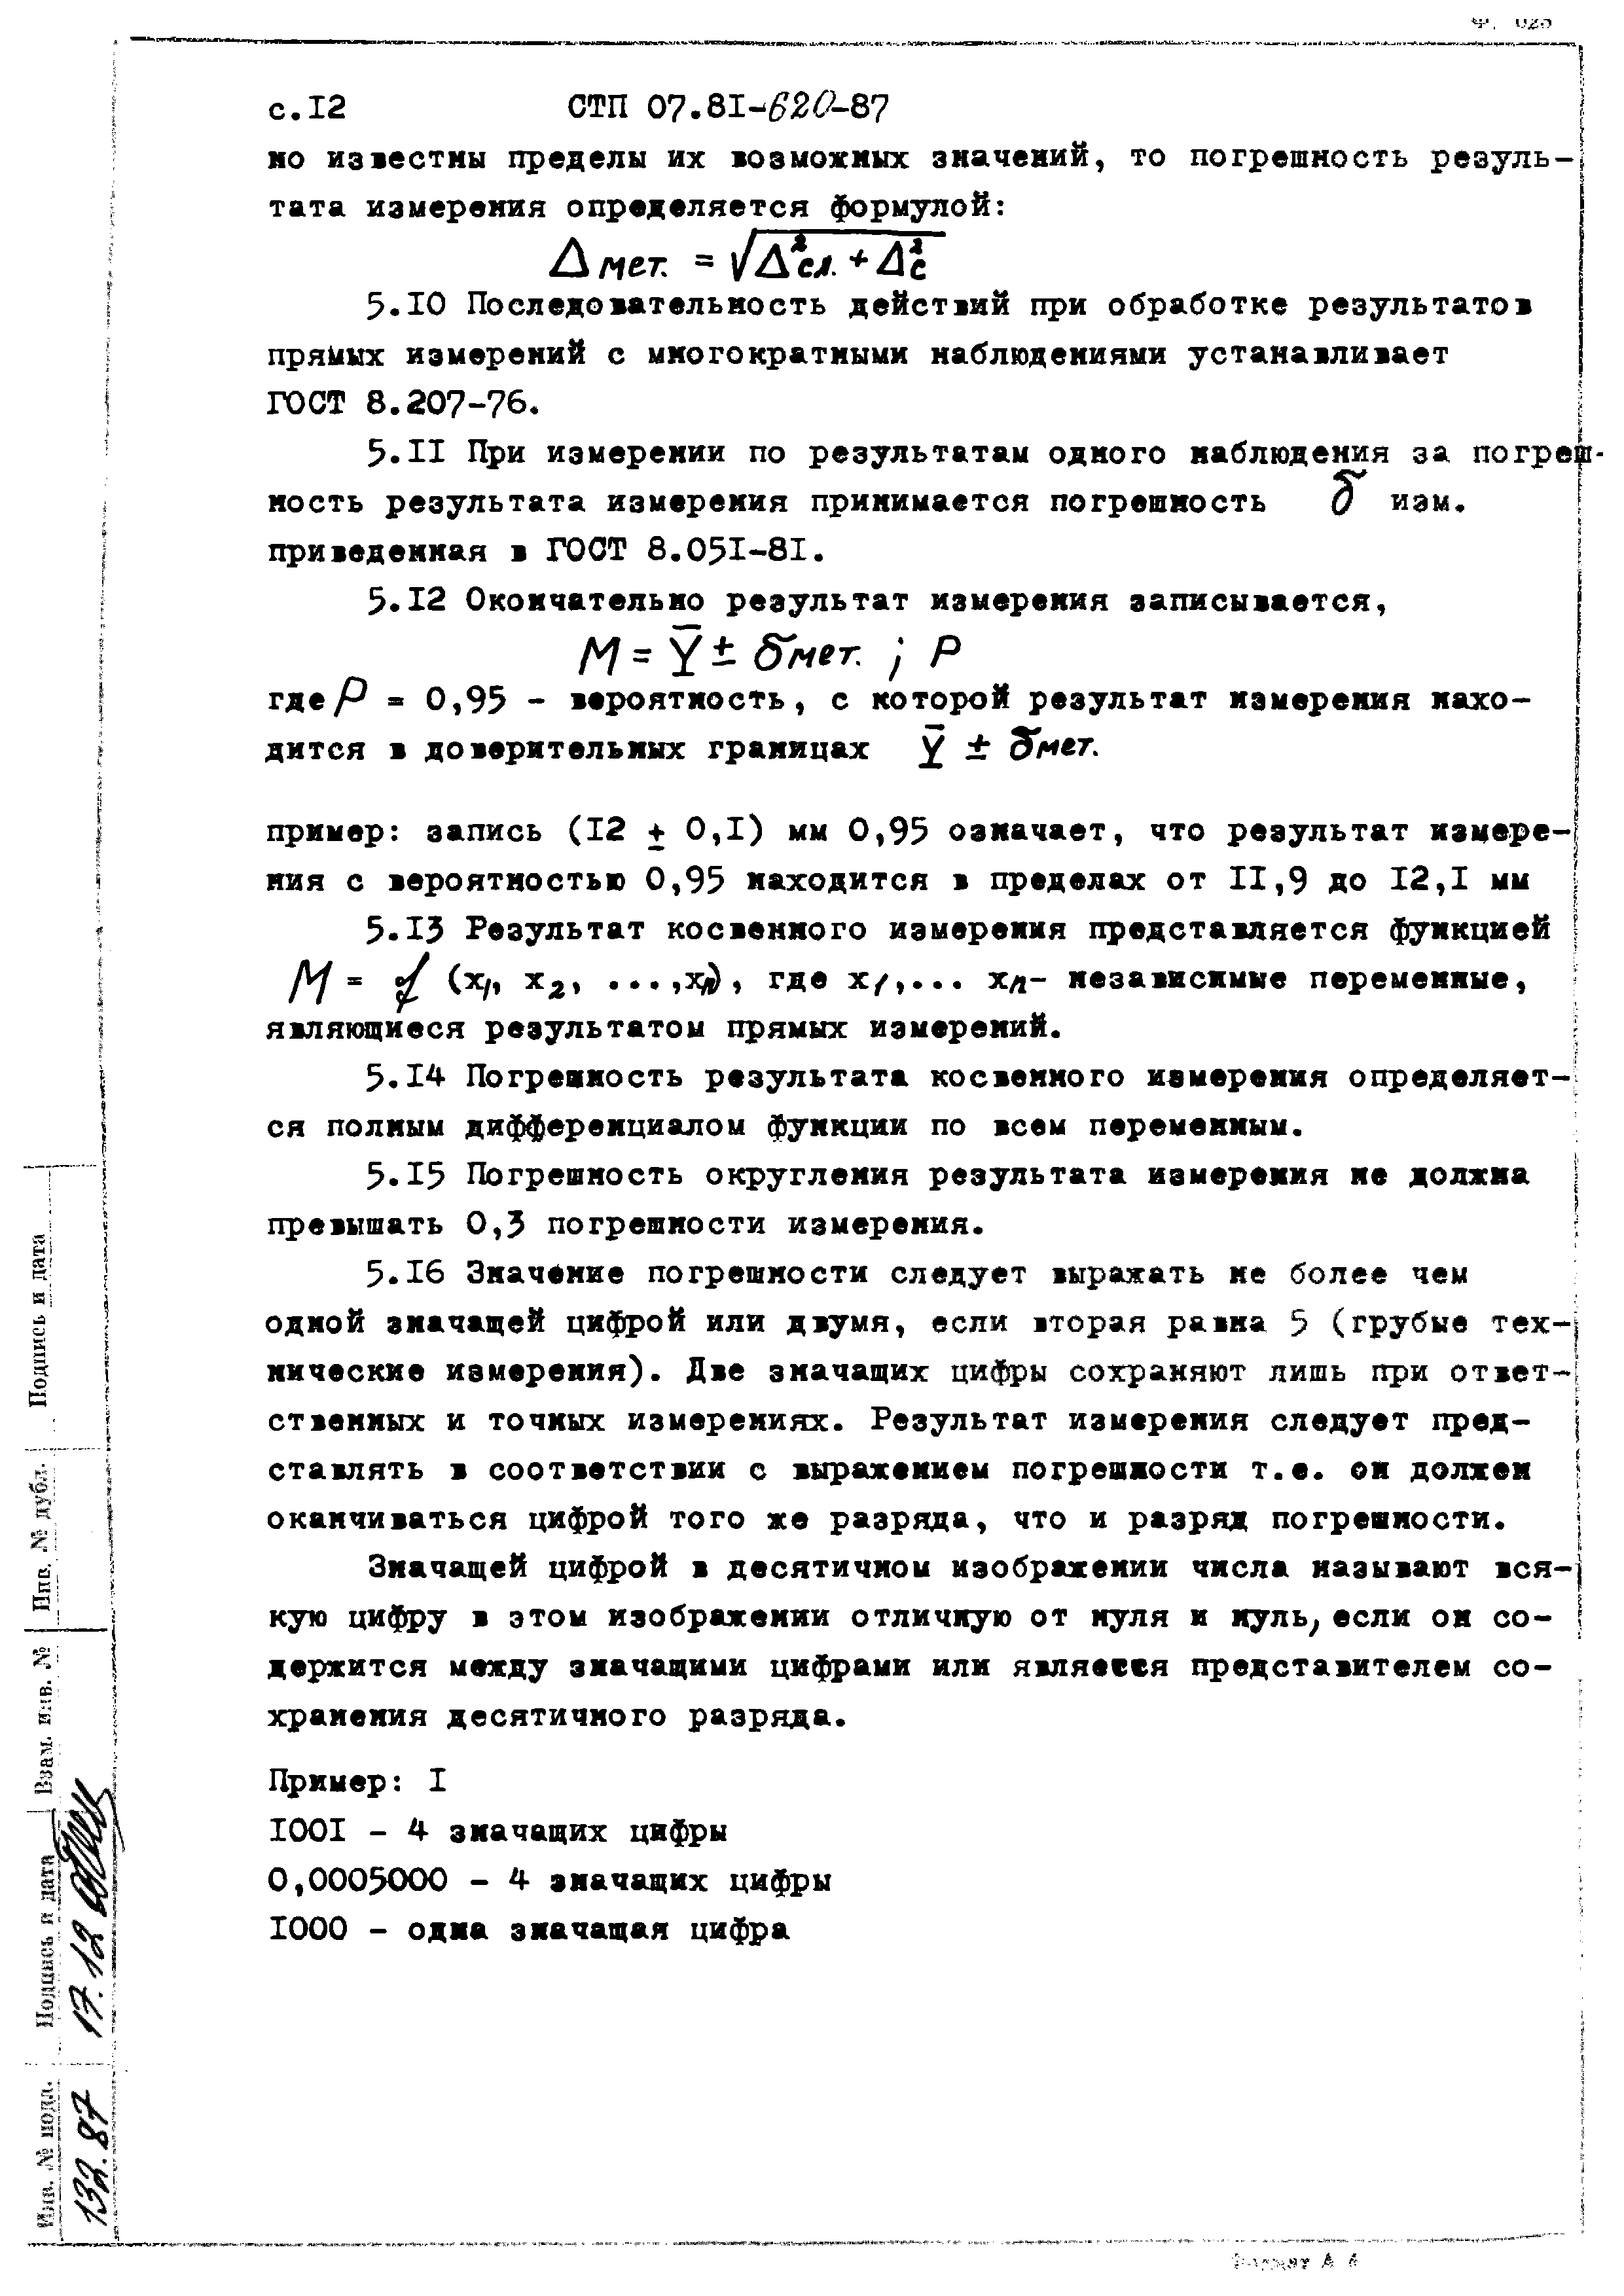 СТП 07.81-620-87